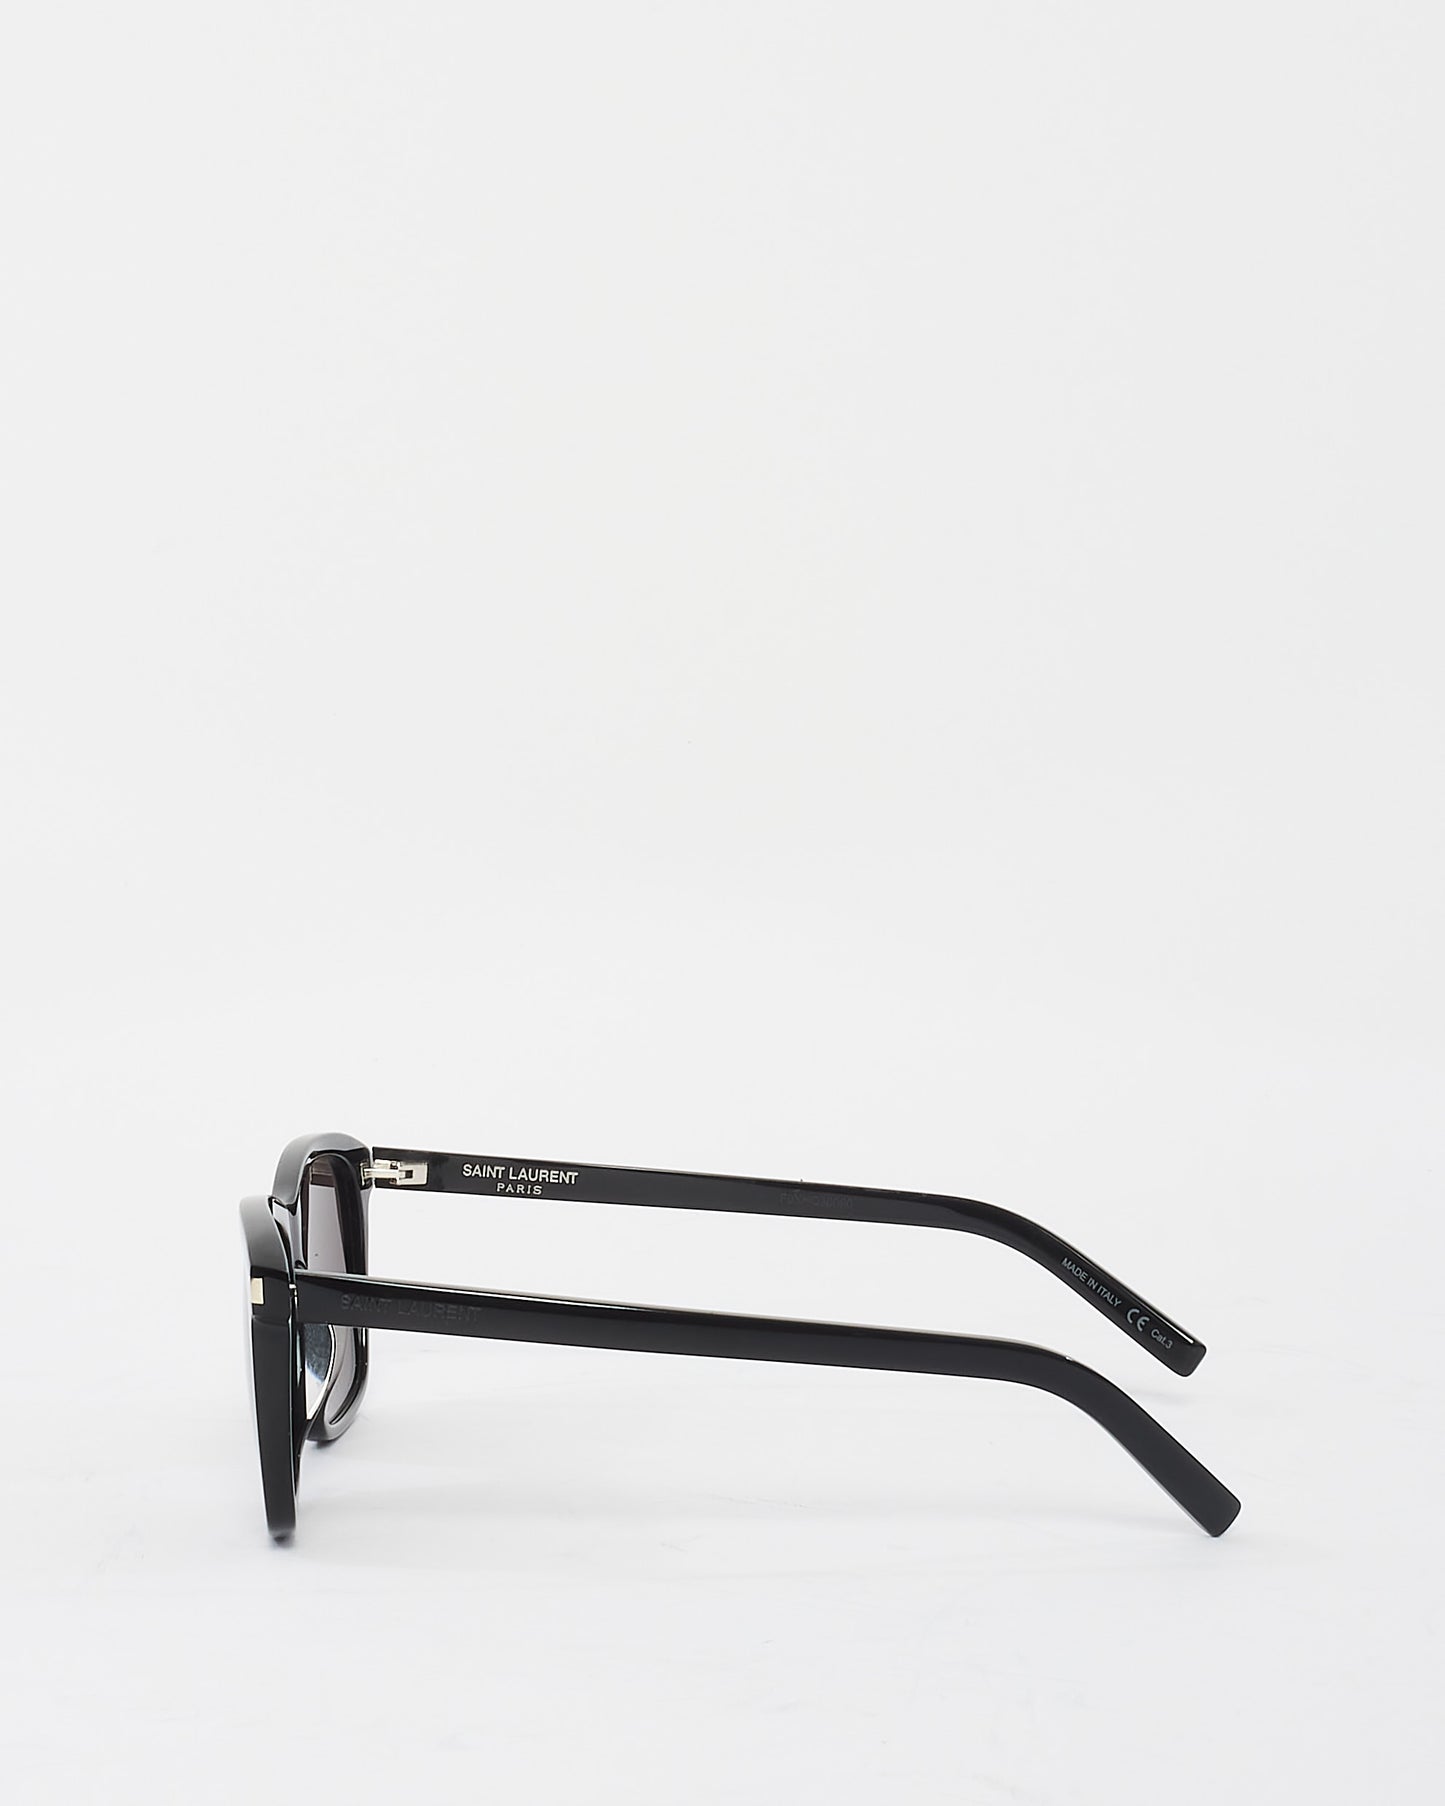 Saint Laurent Black Acetate Wayfarer Sunglasses SL339